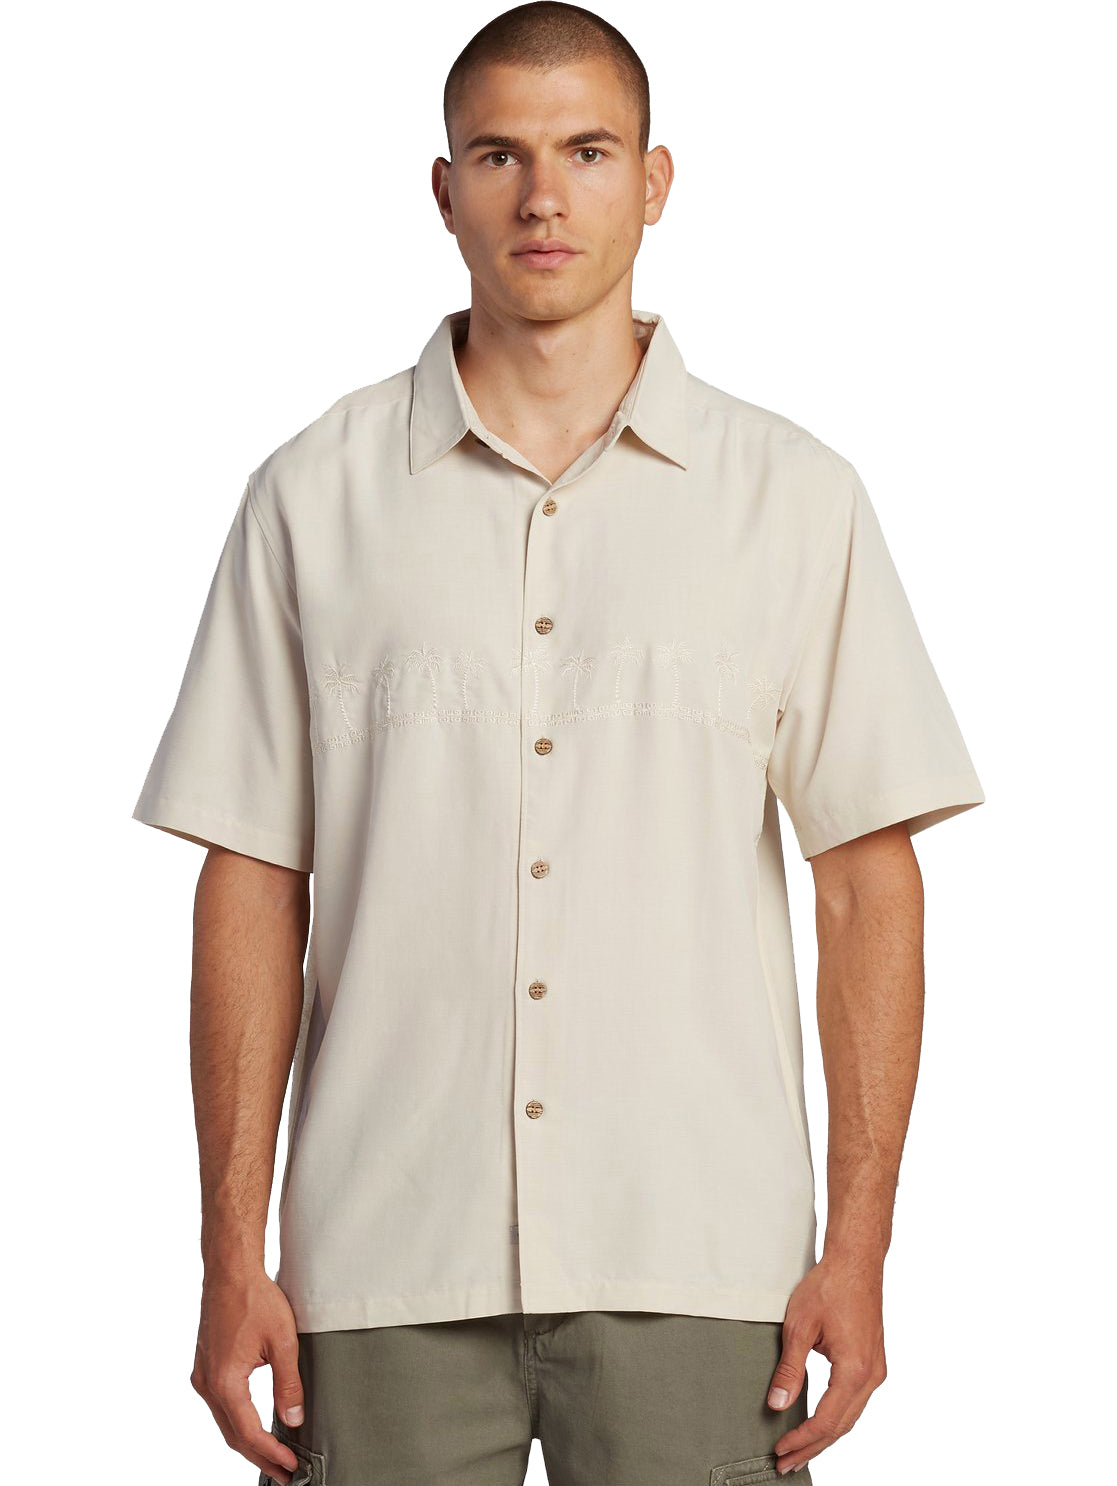 Quiksilver Waterman Tahiti Palms SS Shirt